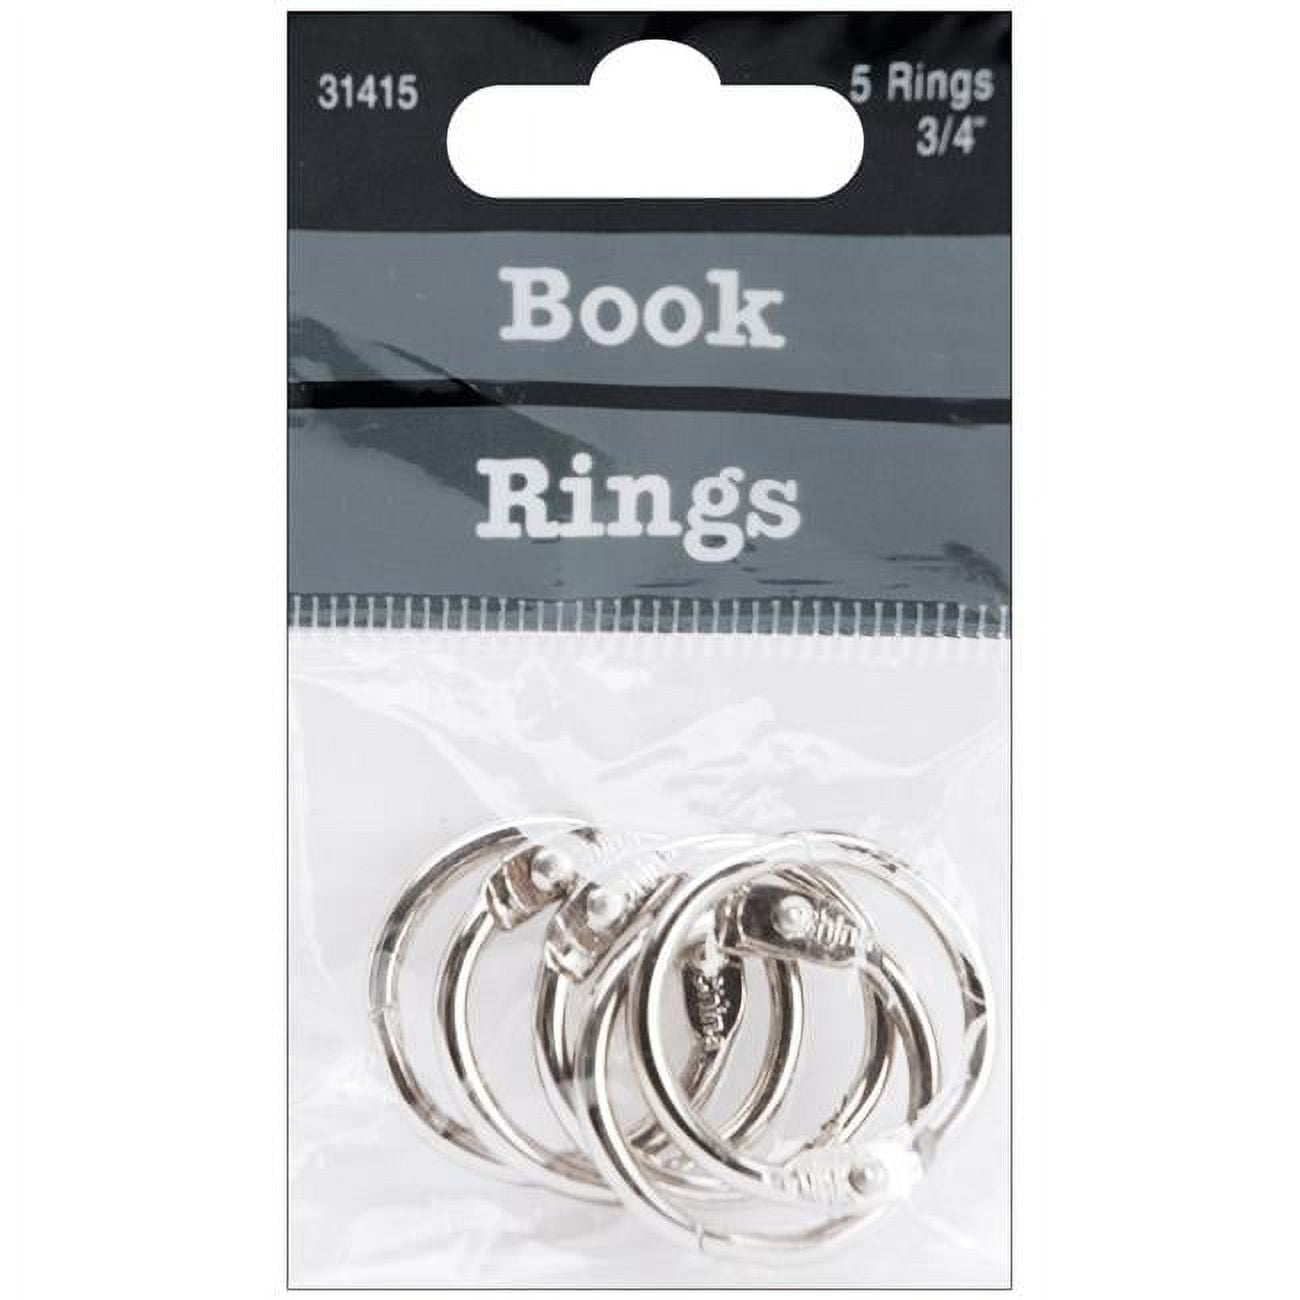 Book Rings 3/4 5 Pack Chrome (31415)